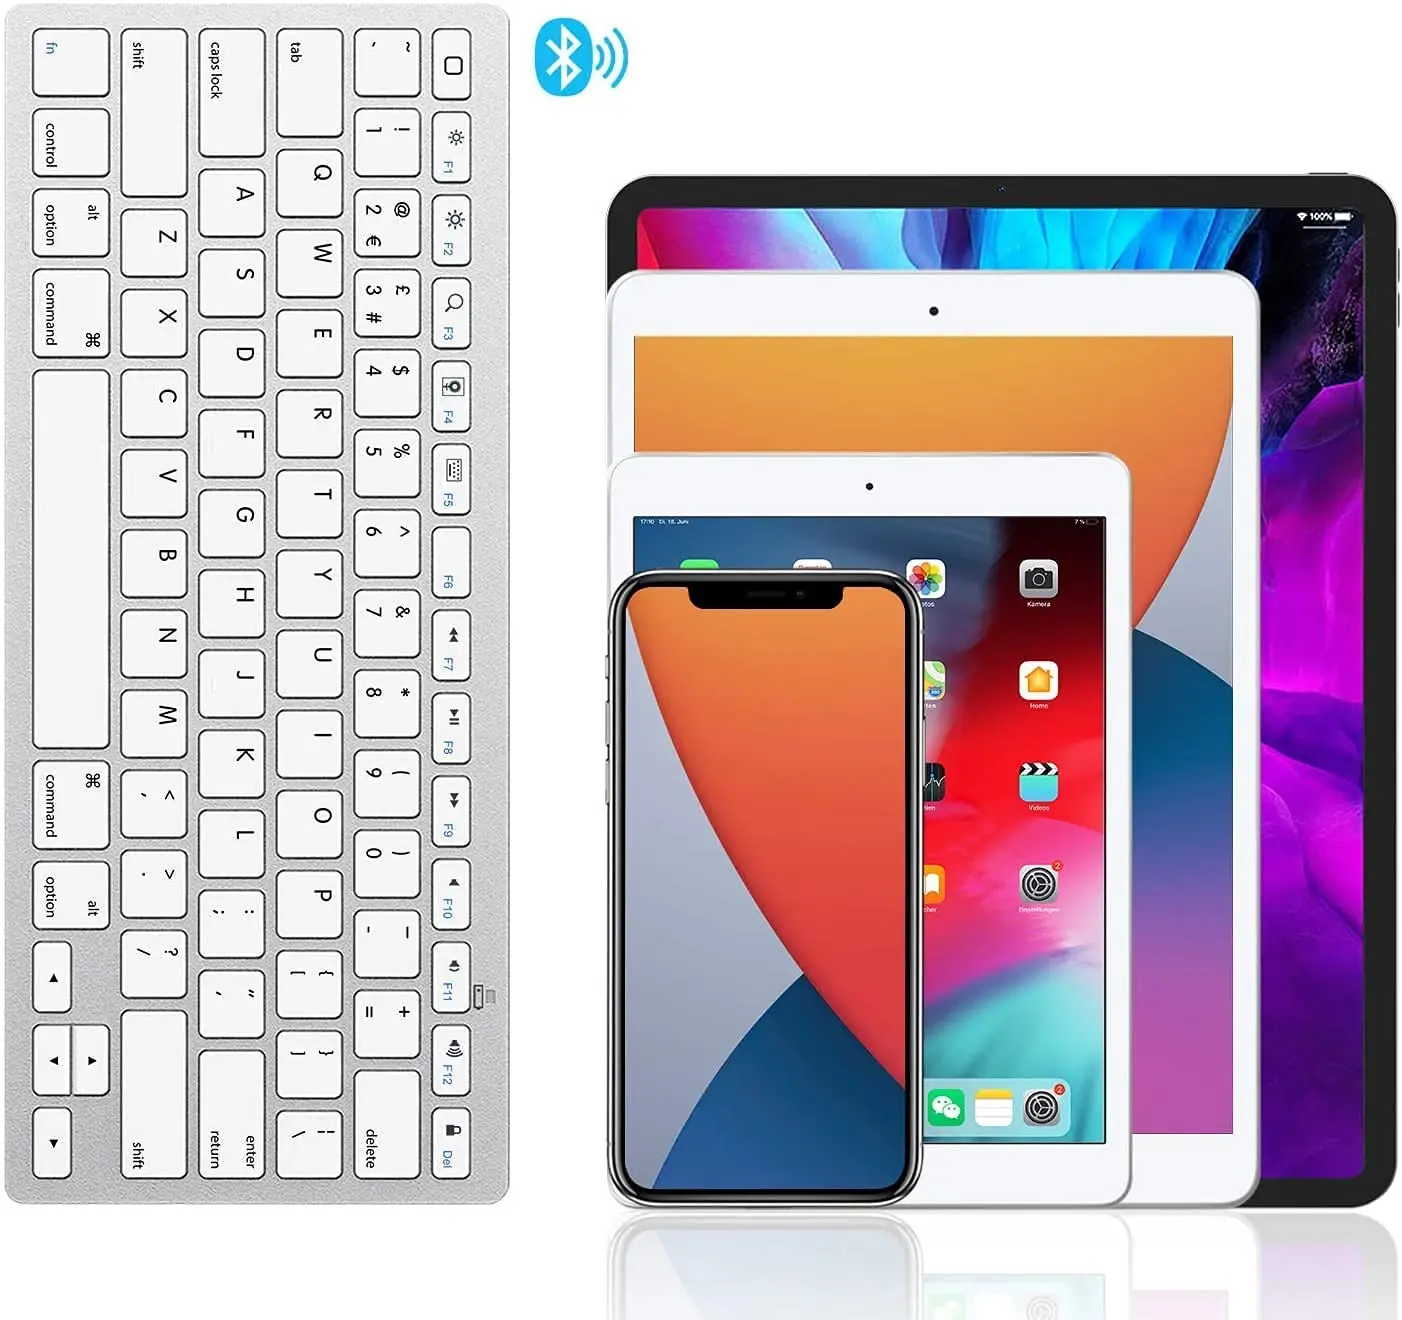 Slim Bluetooth Wireless Keyboard 78 keys for Tablet Phone iPad Laptop Macbook Compatible Windows Android iOS Mac OS magic keyboard pc